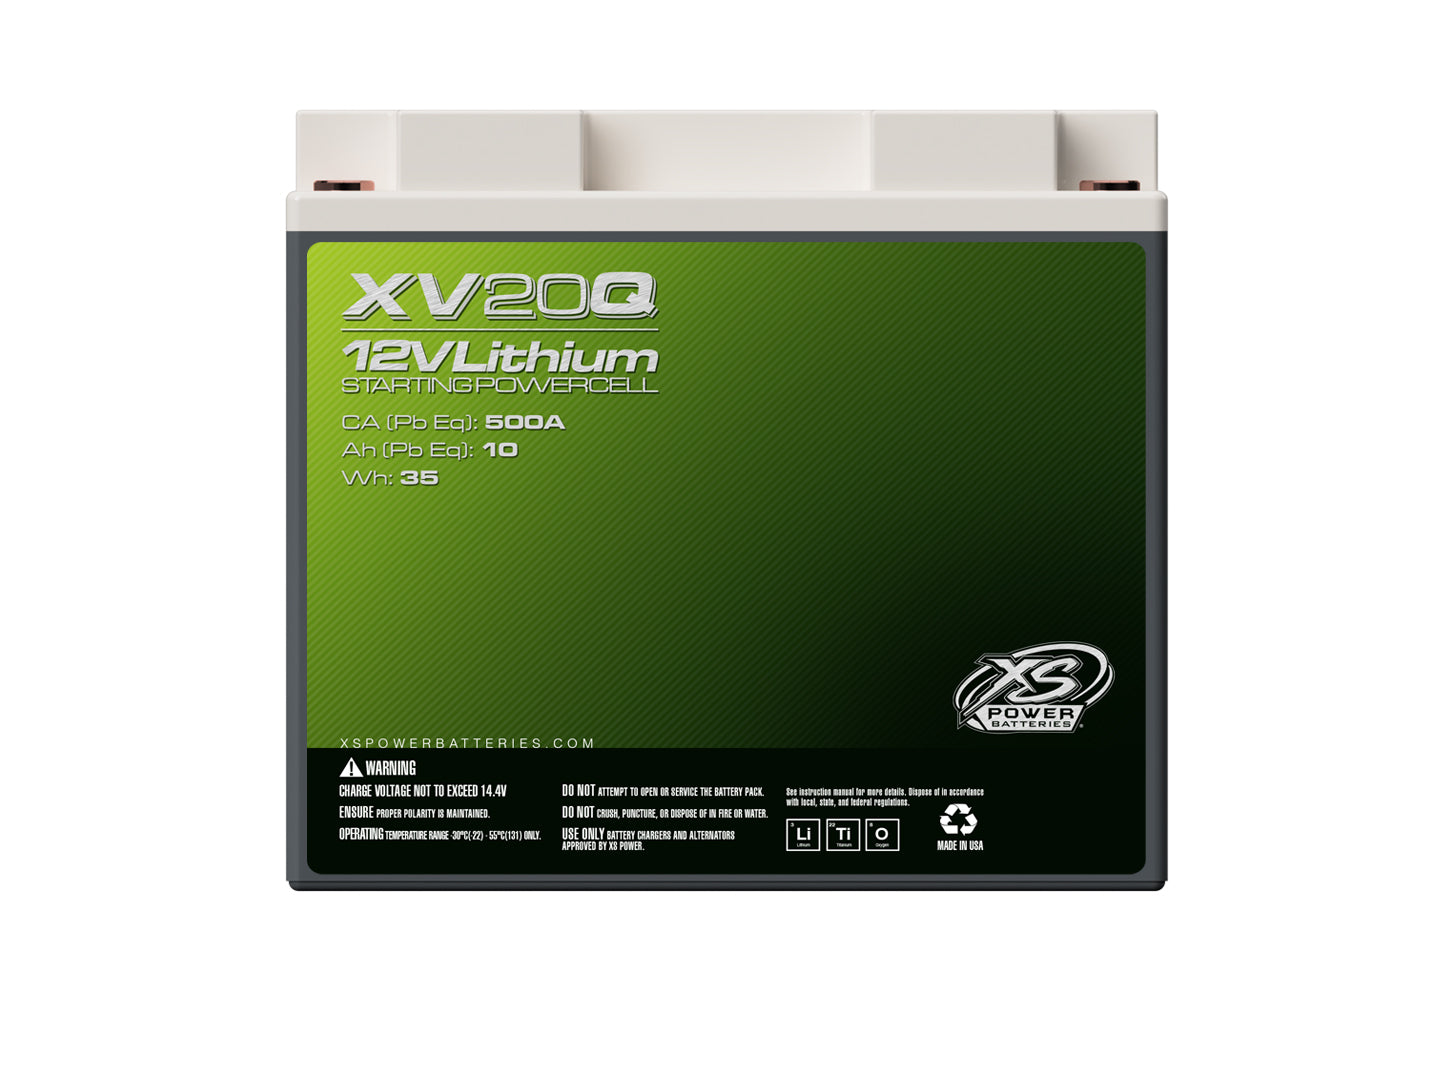 XV20Q XS Power 12VDC Group 20L Lithium LTO Underhood-Safe Vehicle Battery 750W 35Wh